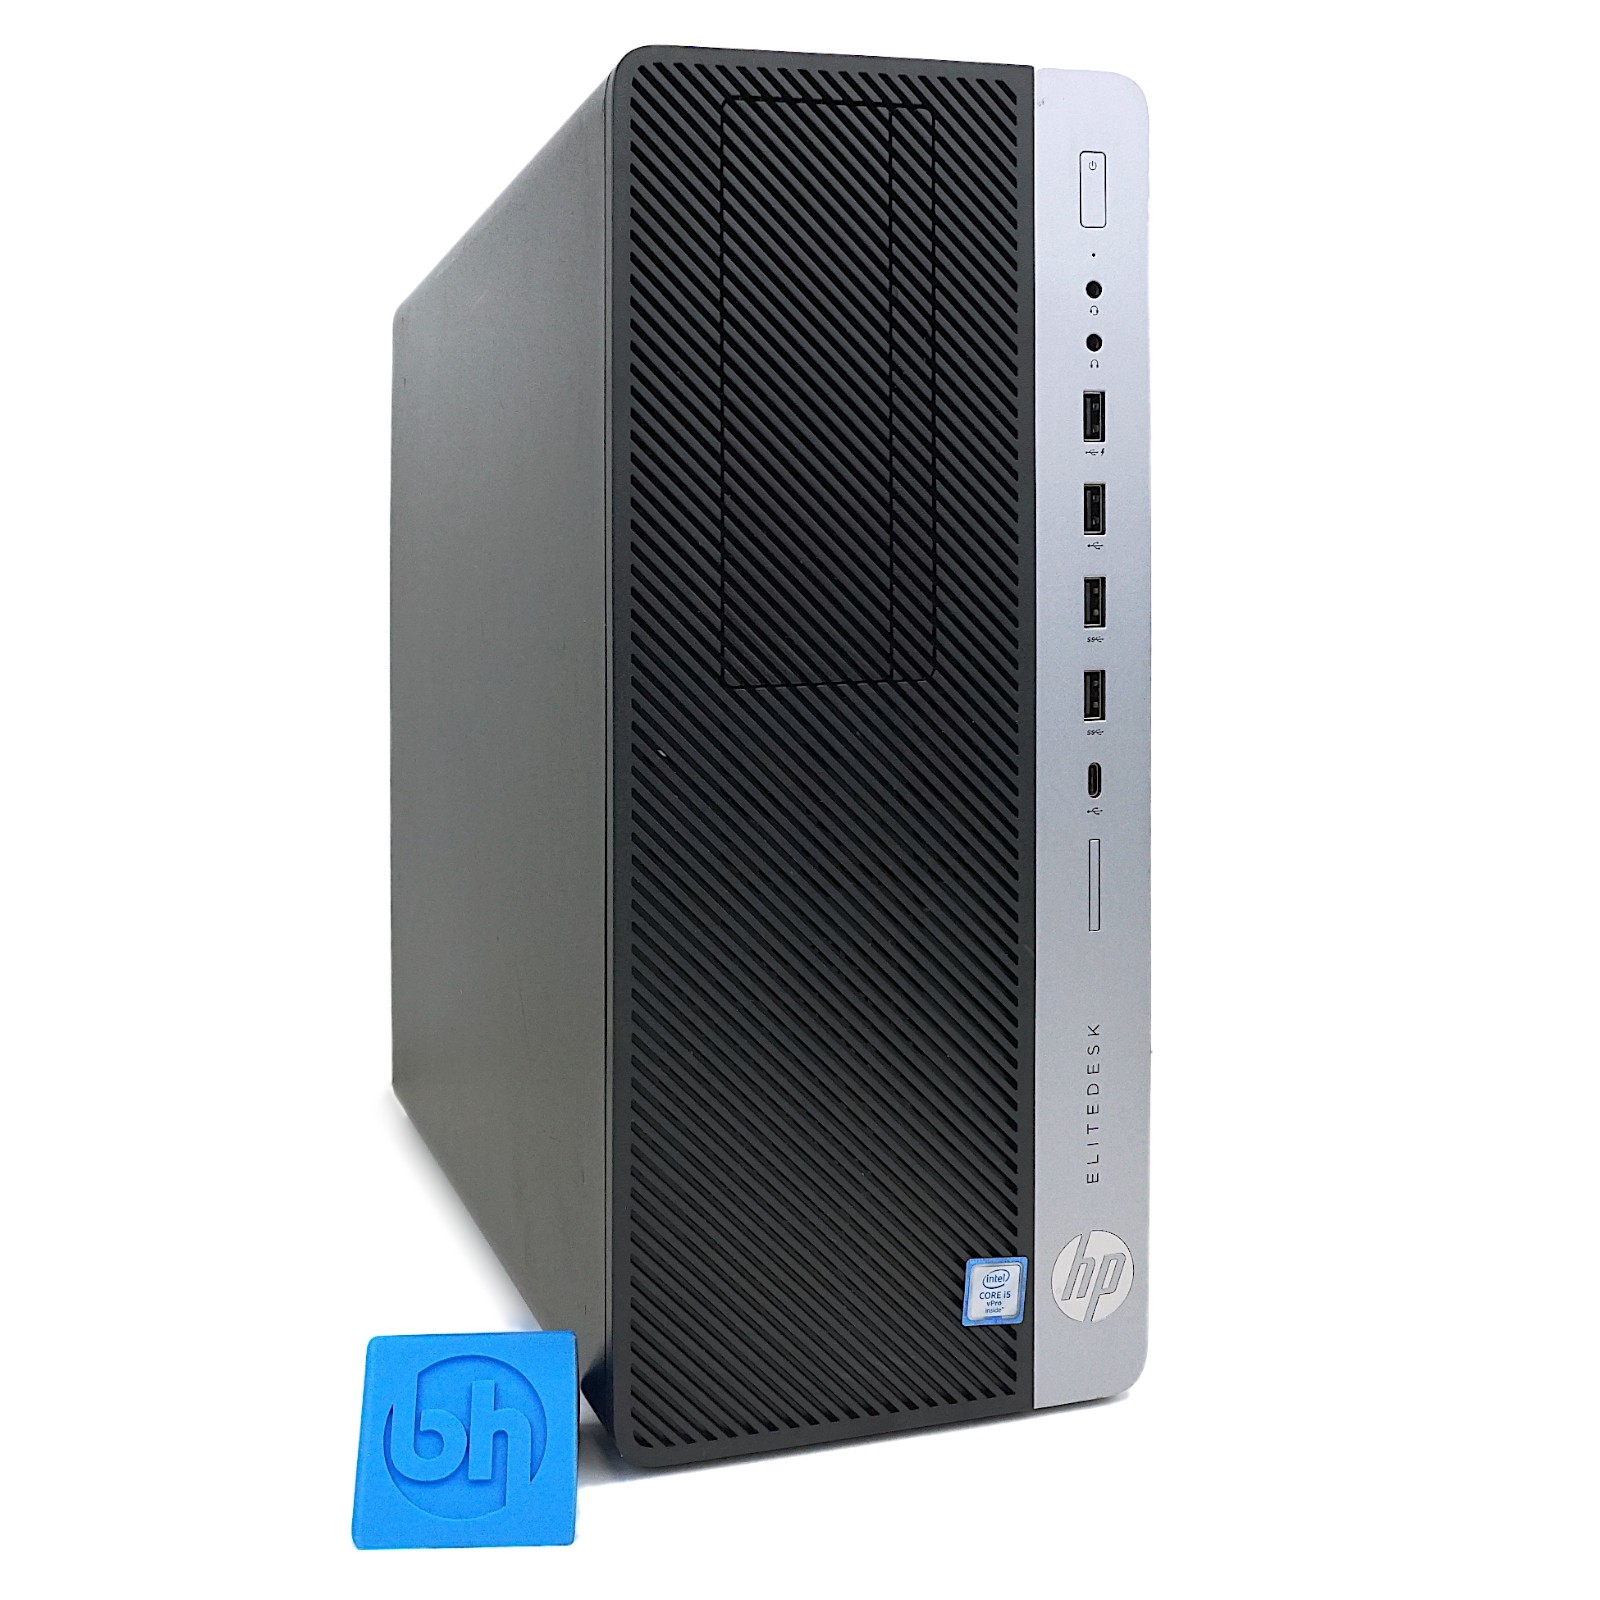 HP EliteDesk 800 G3 Tower Desktop PC Front Angle Left